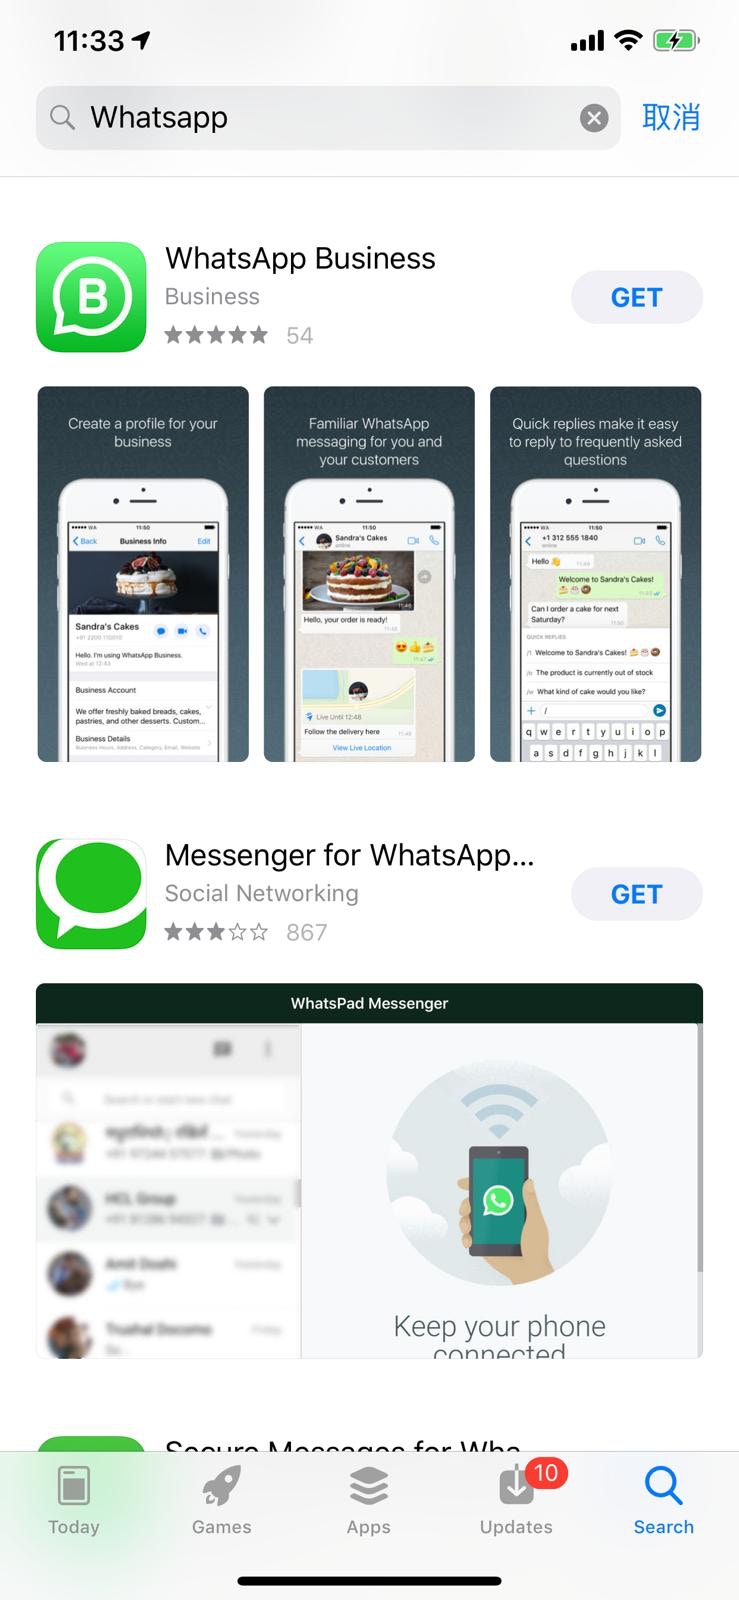 Whatsapp Business上架教你iphone一機兩號秘技